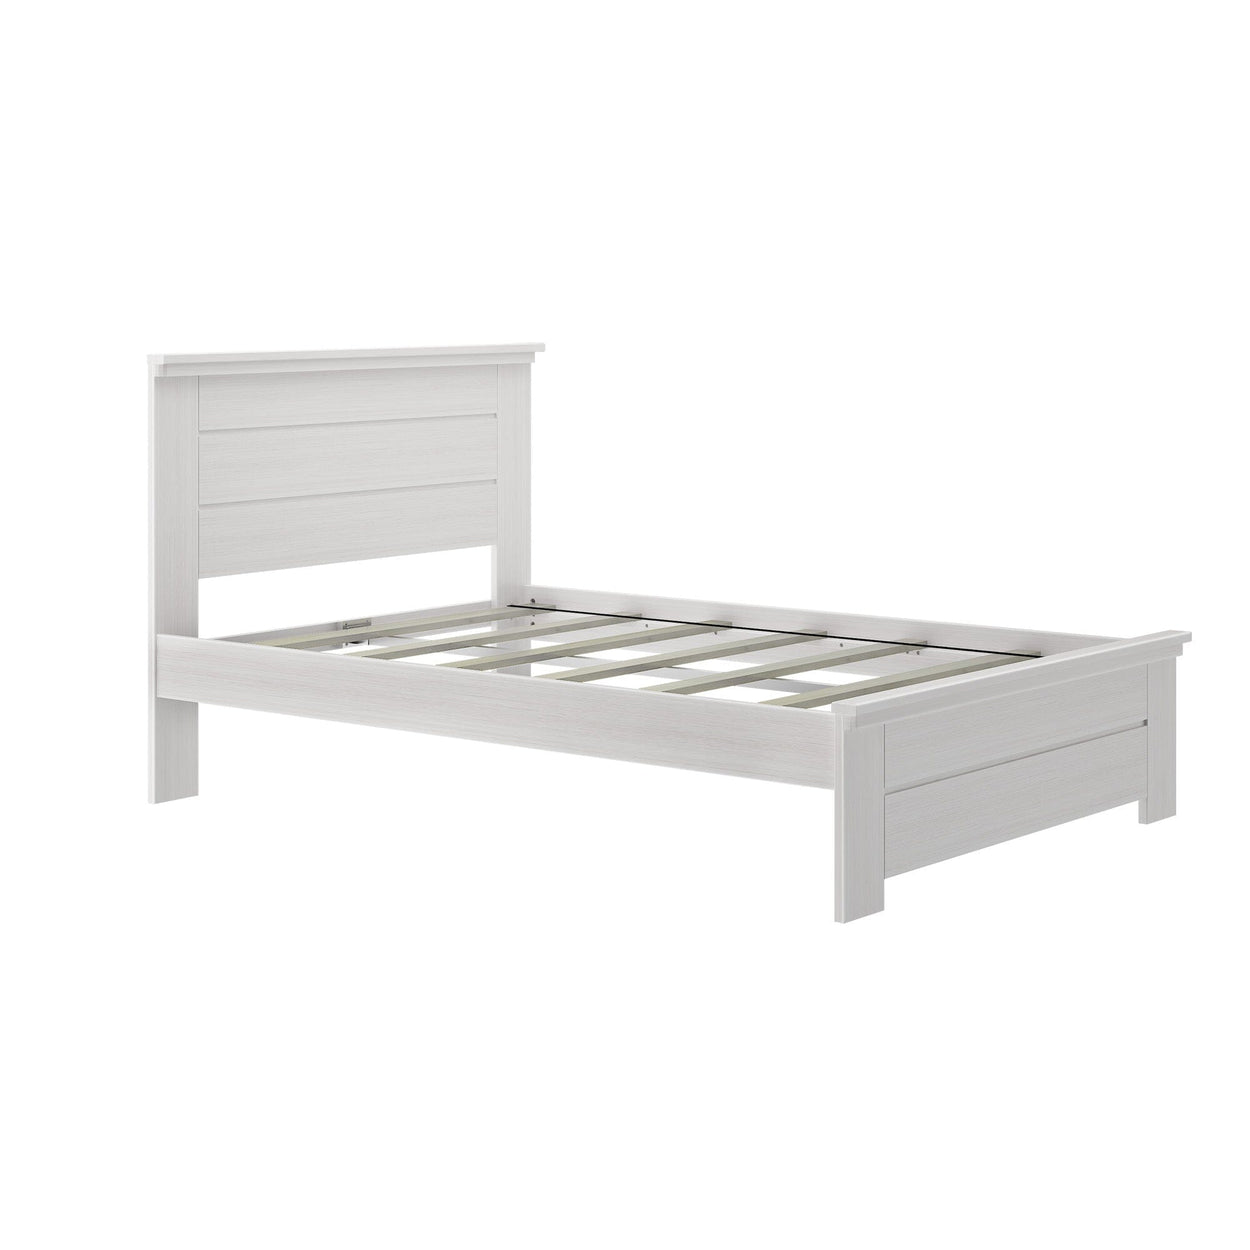 190221-182 : Kids Beds K/D Full Bed Panel 7 slats w/ metal support bar, White Wash